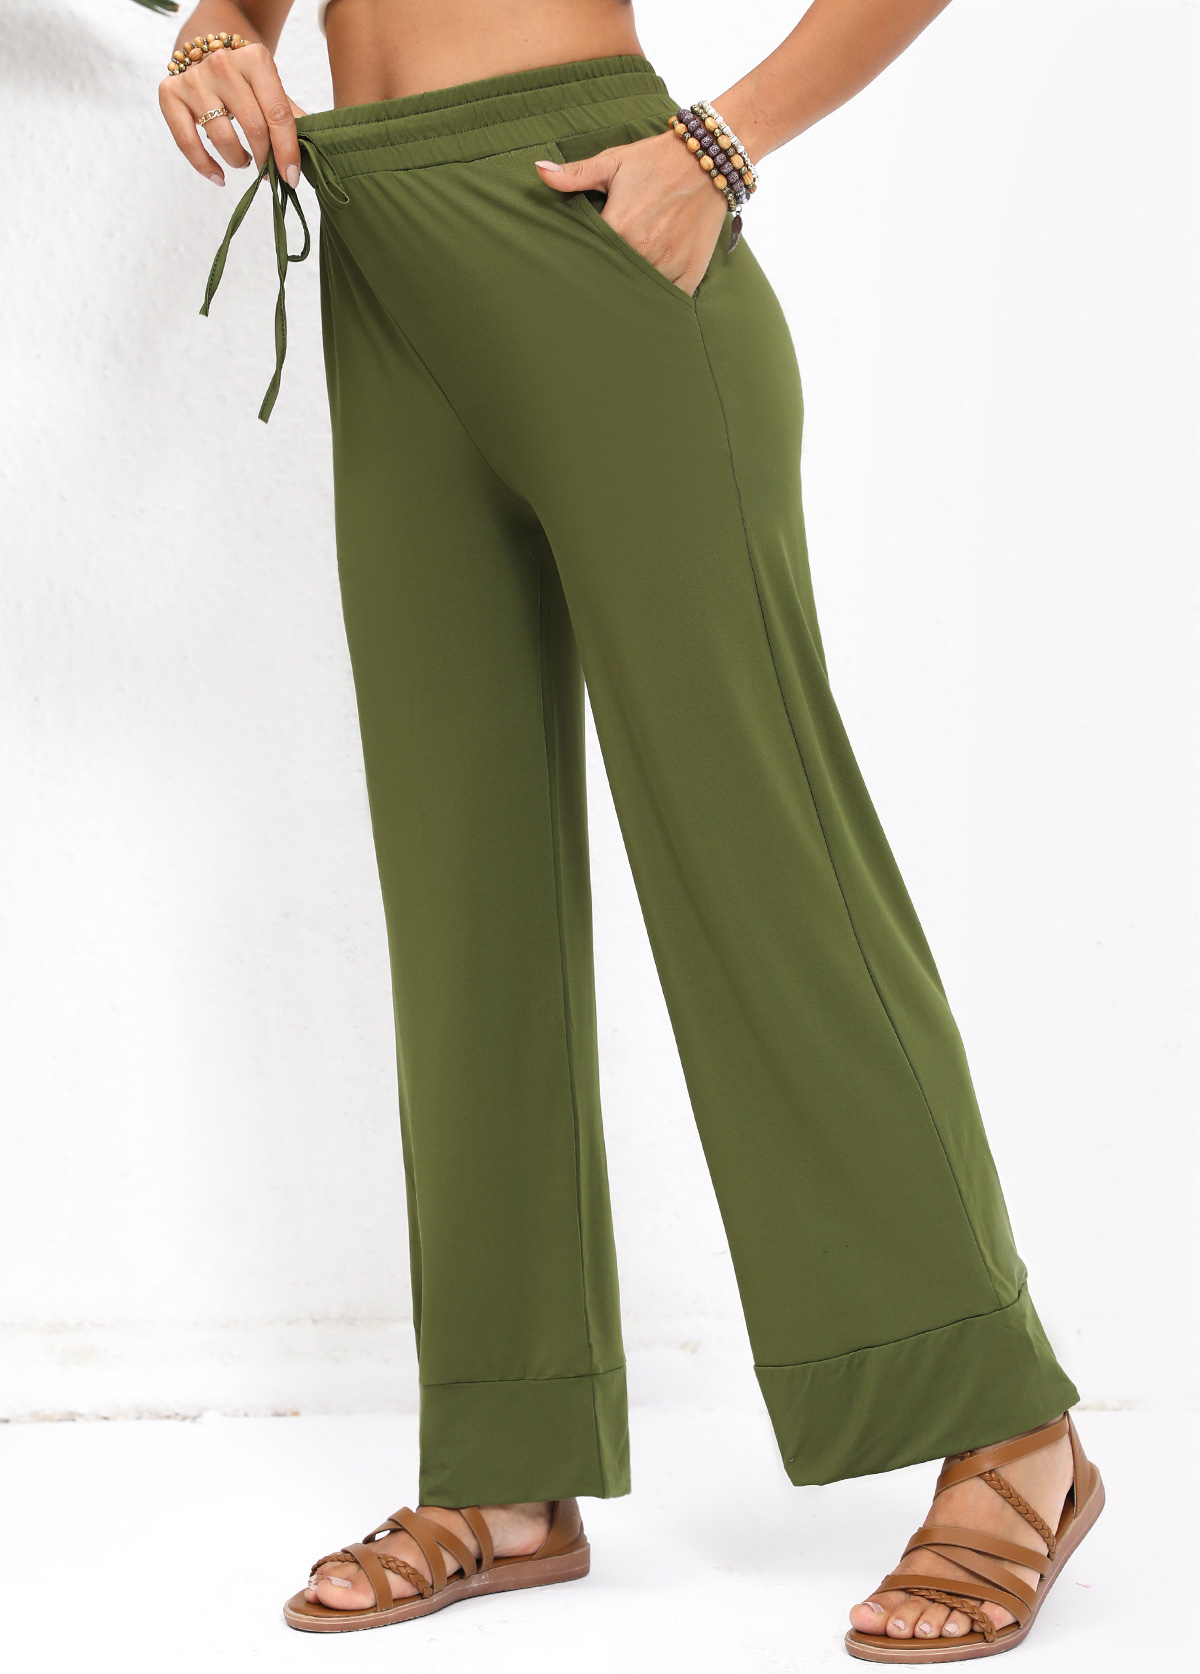 Pocket Olive Green Elastic Waist High Waisted Pants